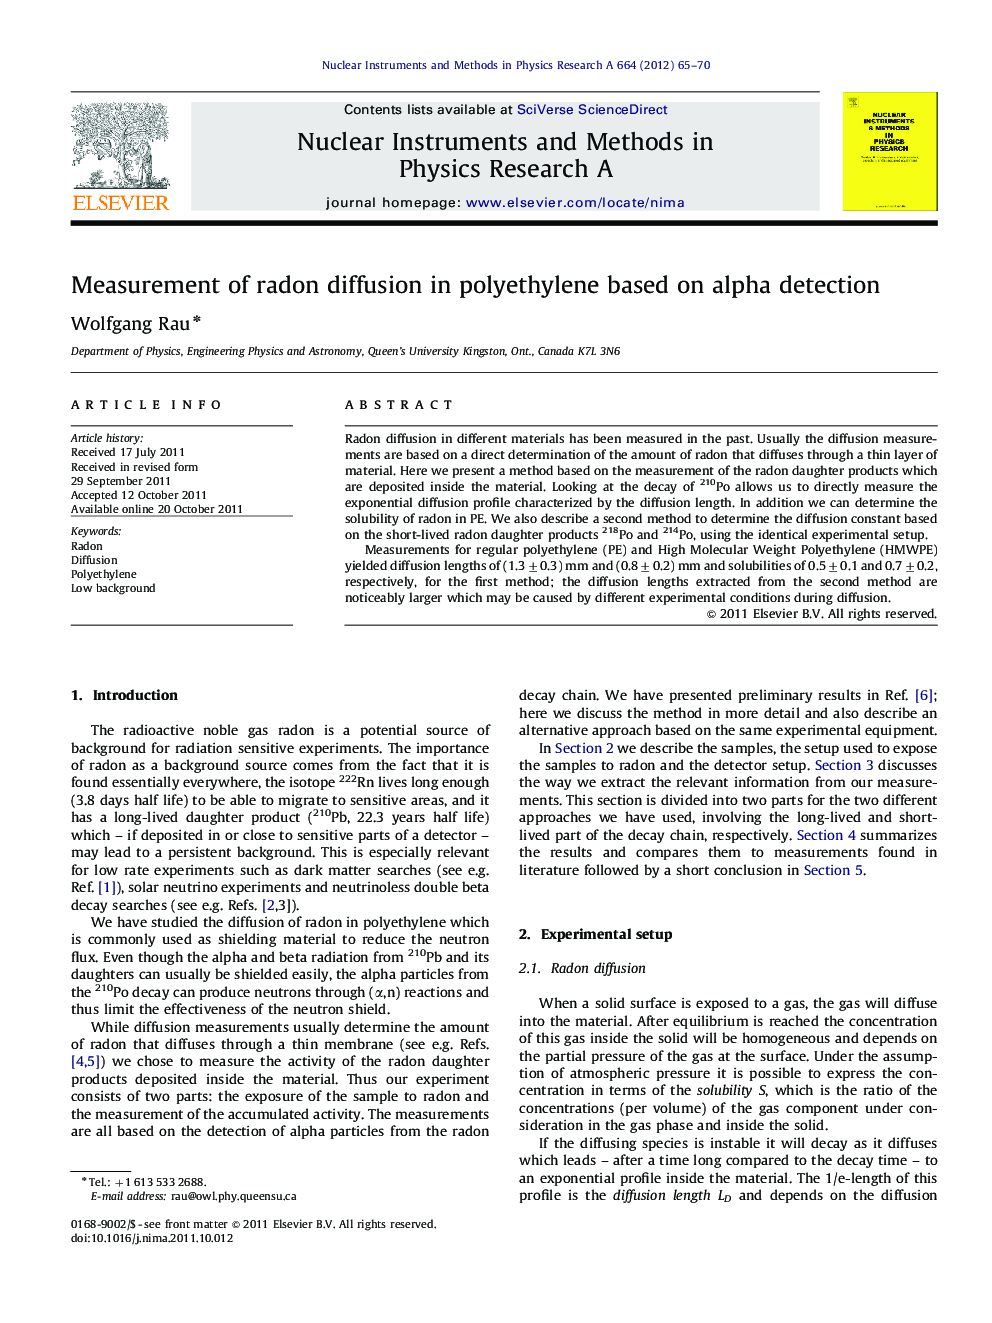 Measurement of radon diffusion in polyethylene based on alpha detection